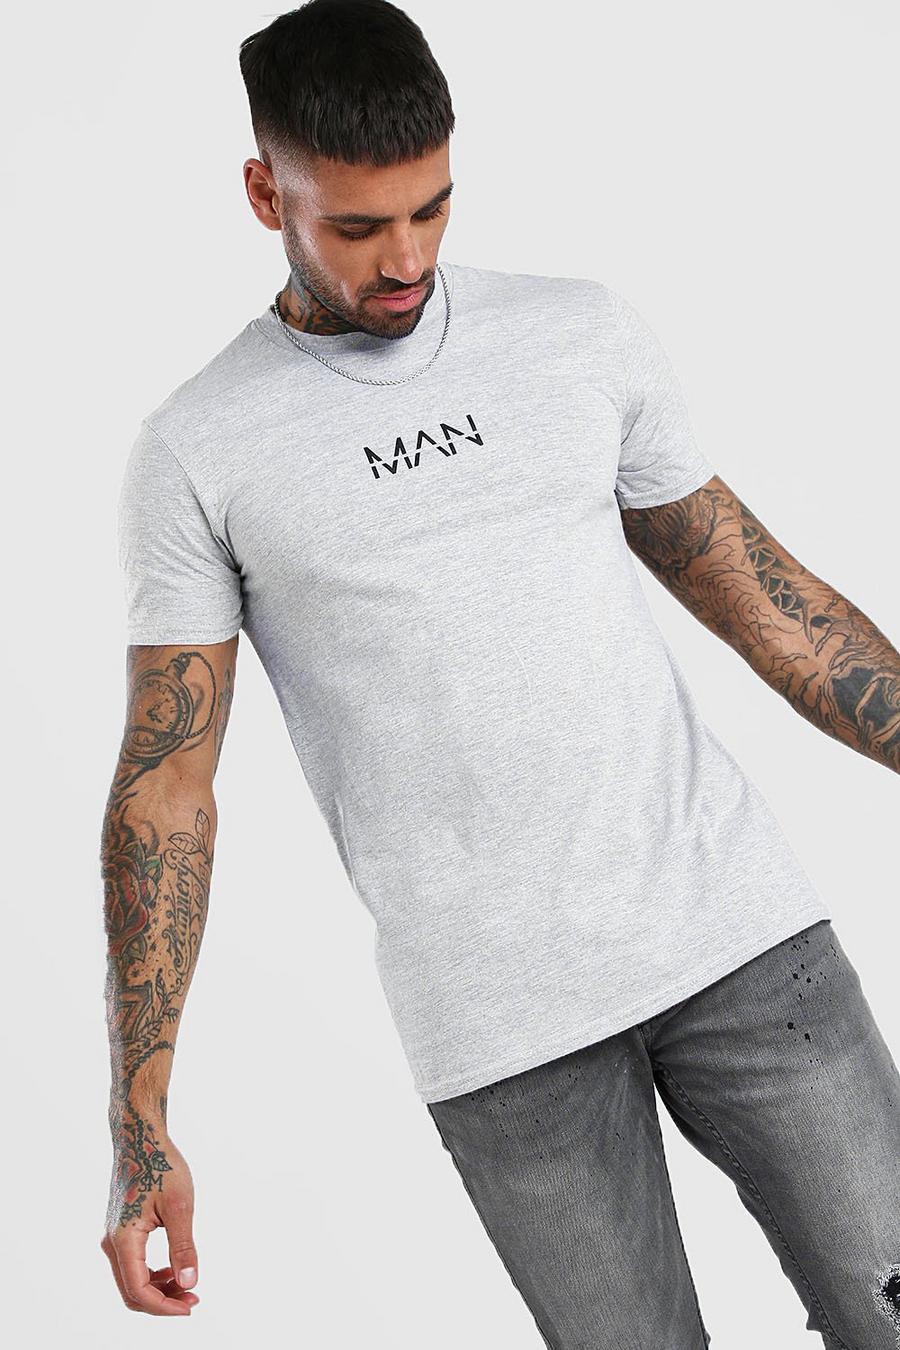 Grey Original Man Graphic T-Shirt image number 1